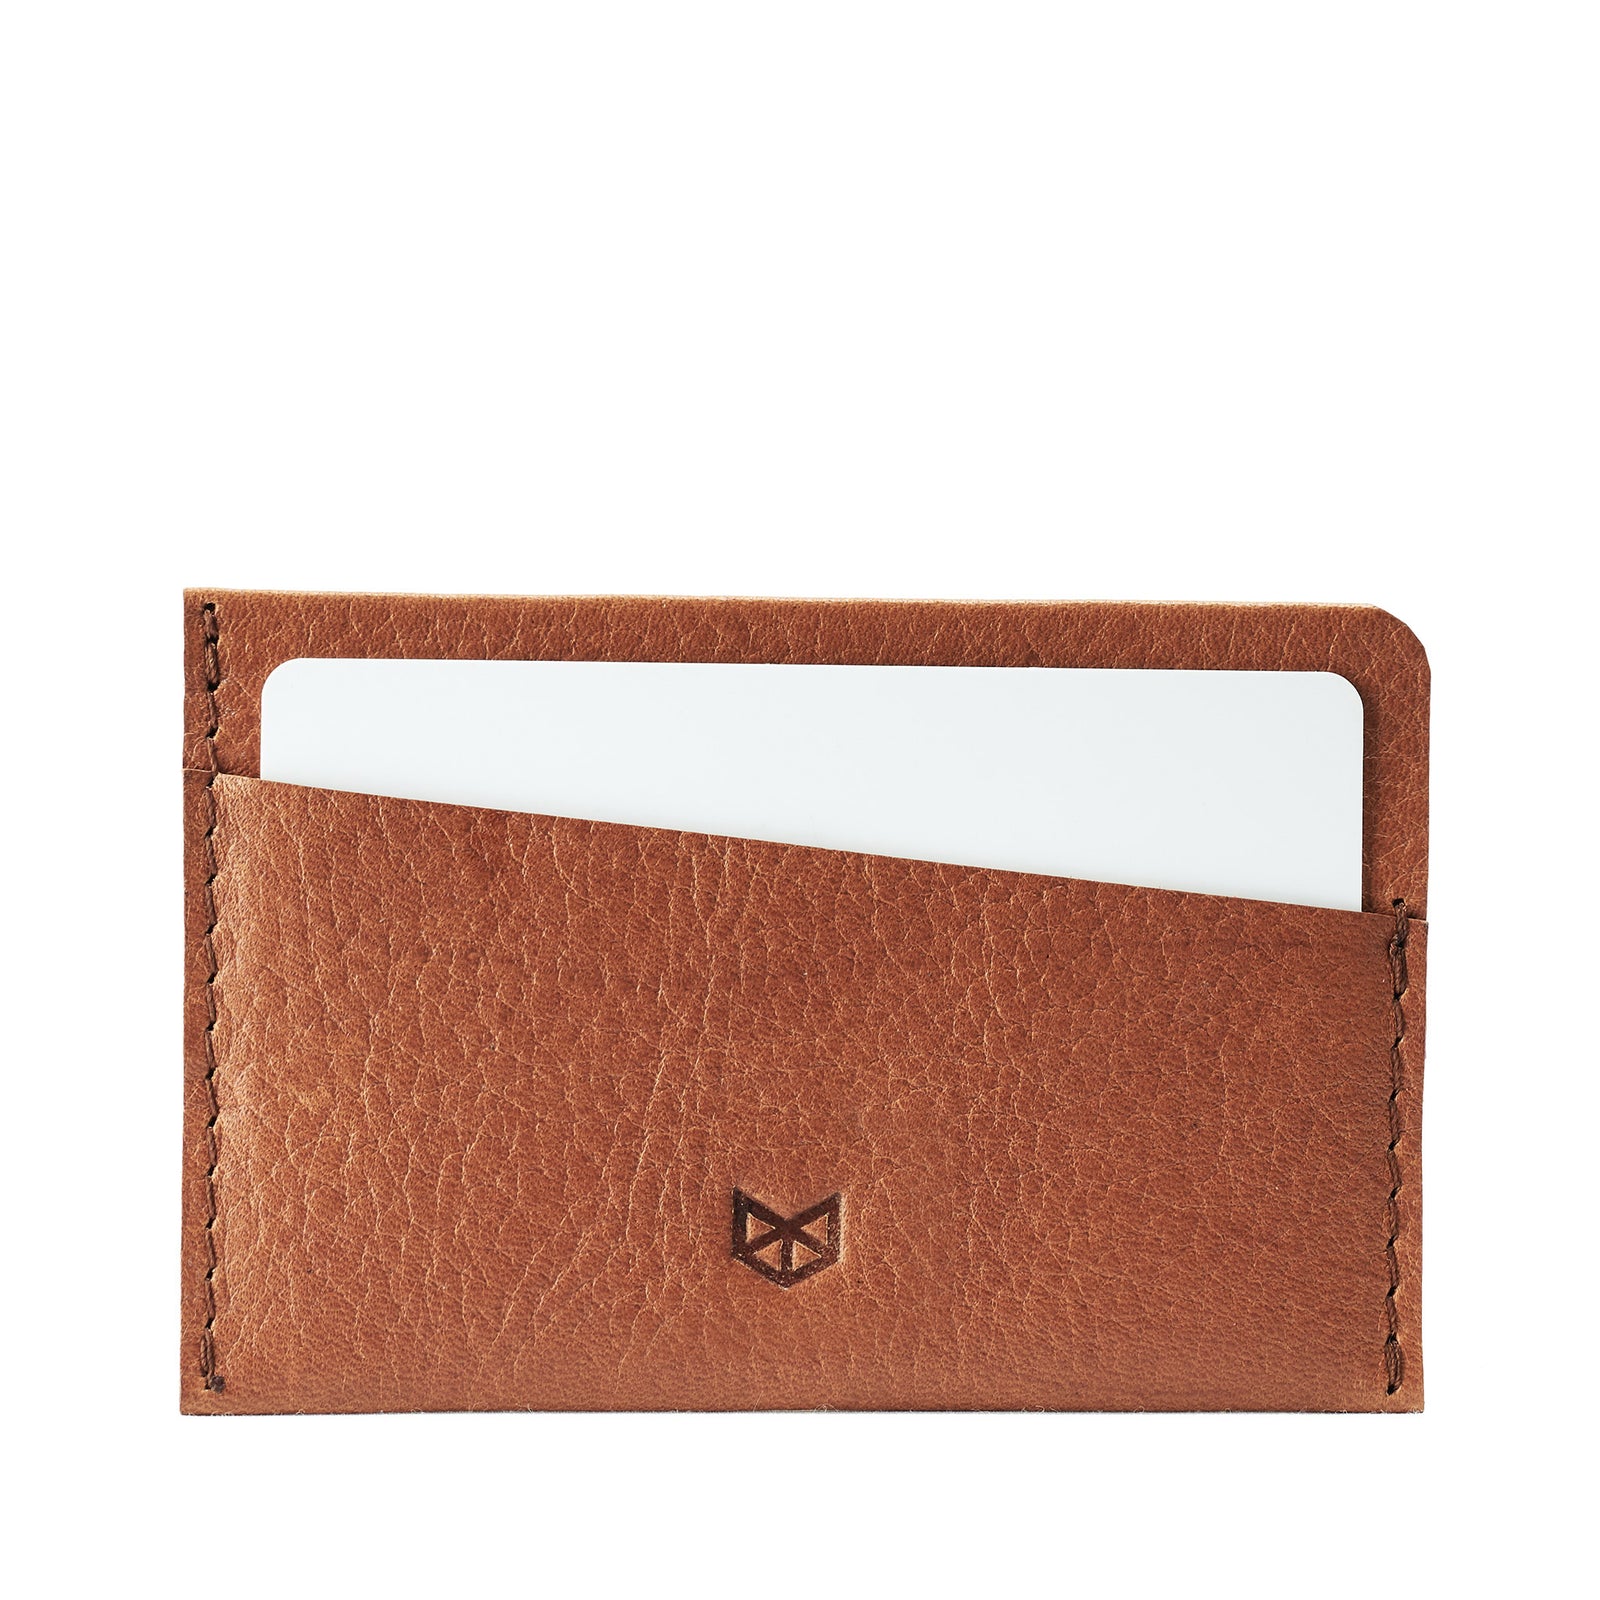 Light Brown card holder for men. Gifts for men, handmade accessories, minimalist designer cards wallet